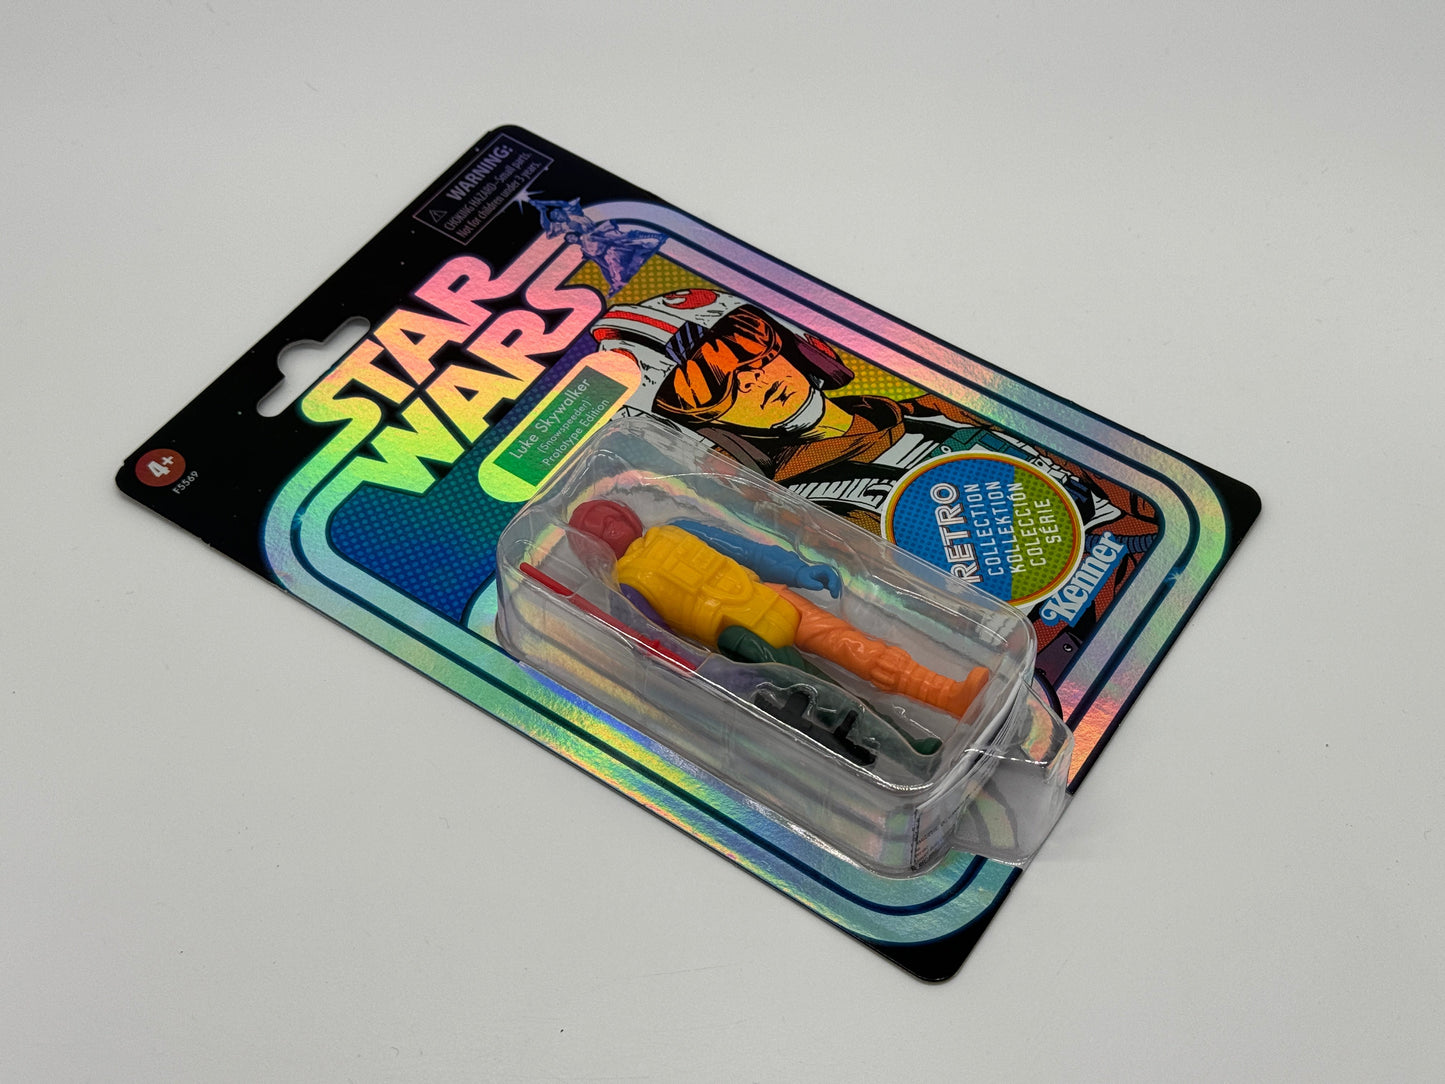 Star Wars Retro Collection "Luke Skywalker Snowspeeder" Prototype Edition Hasbro (#2)